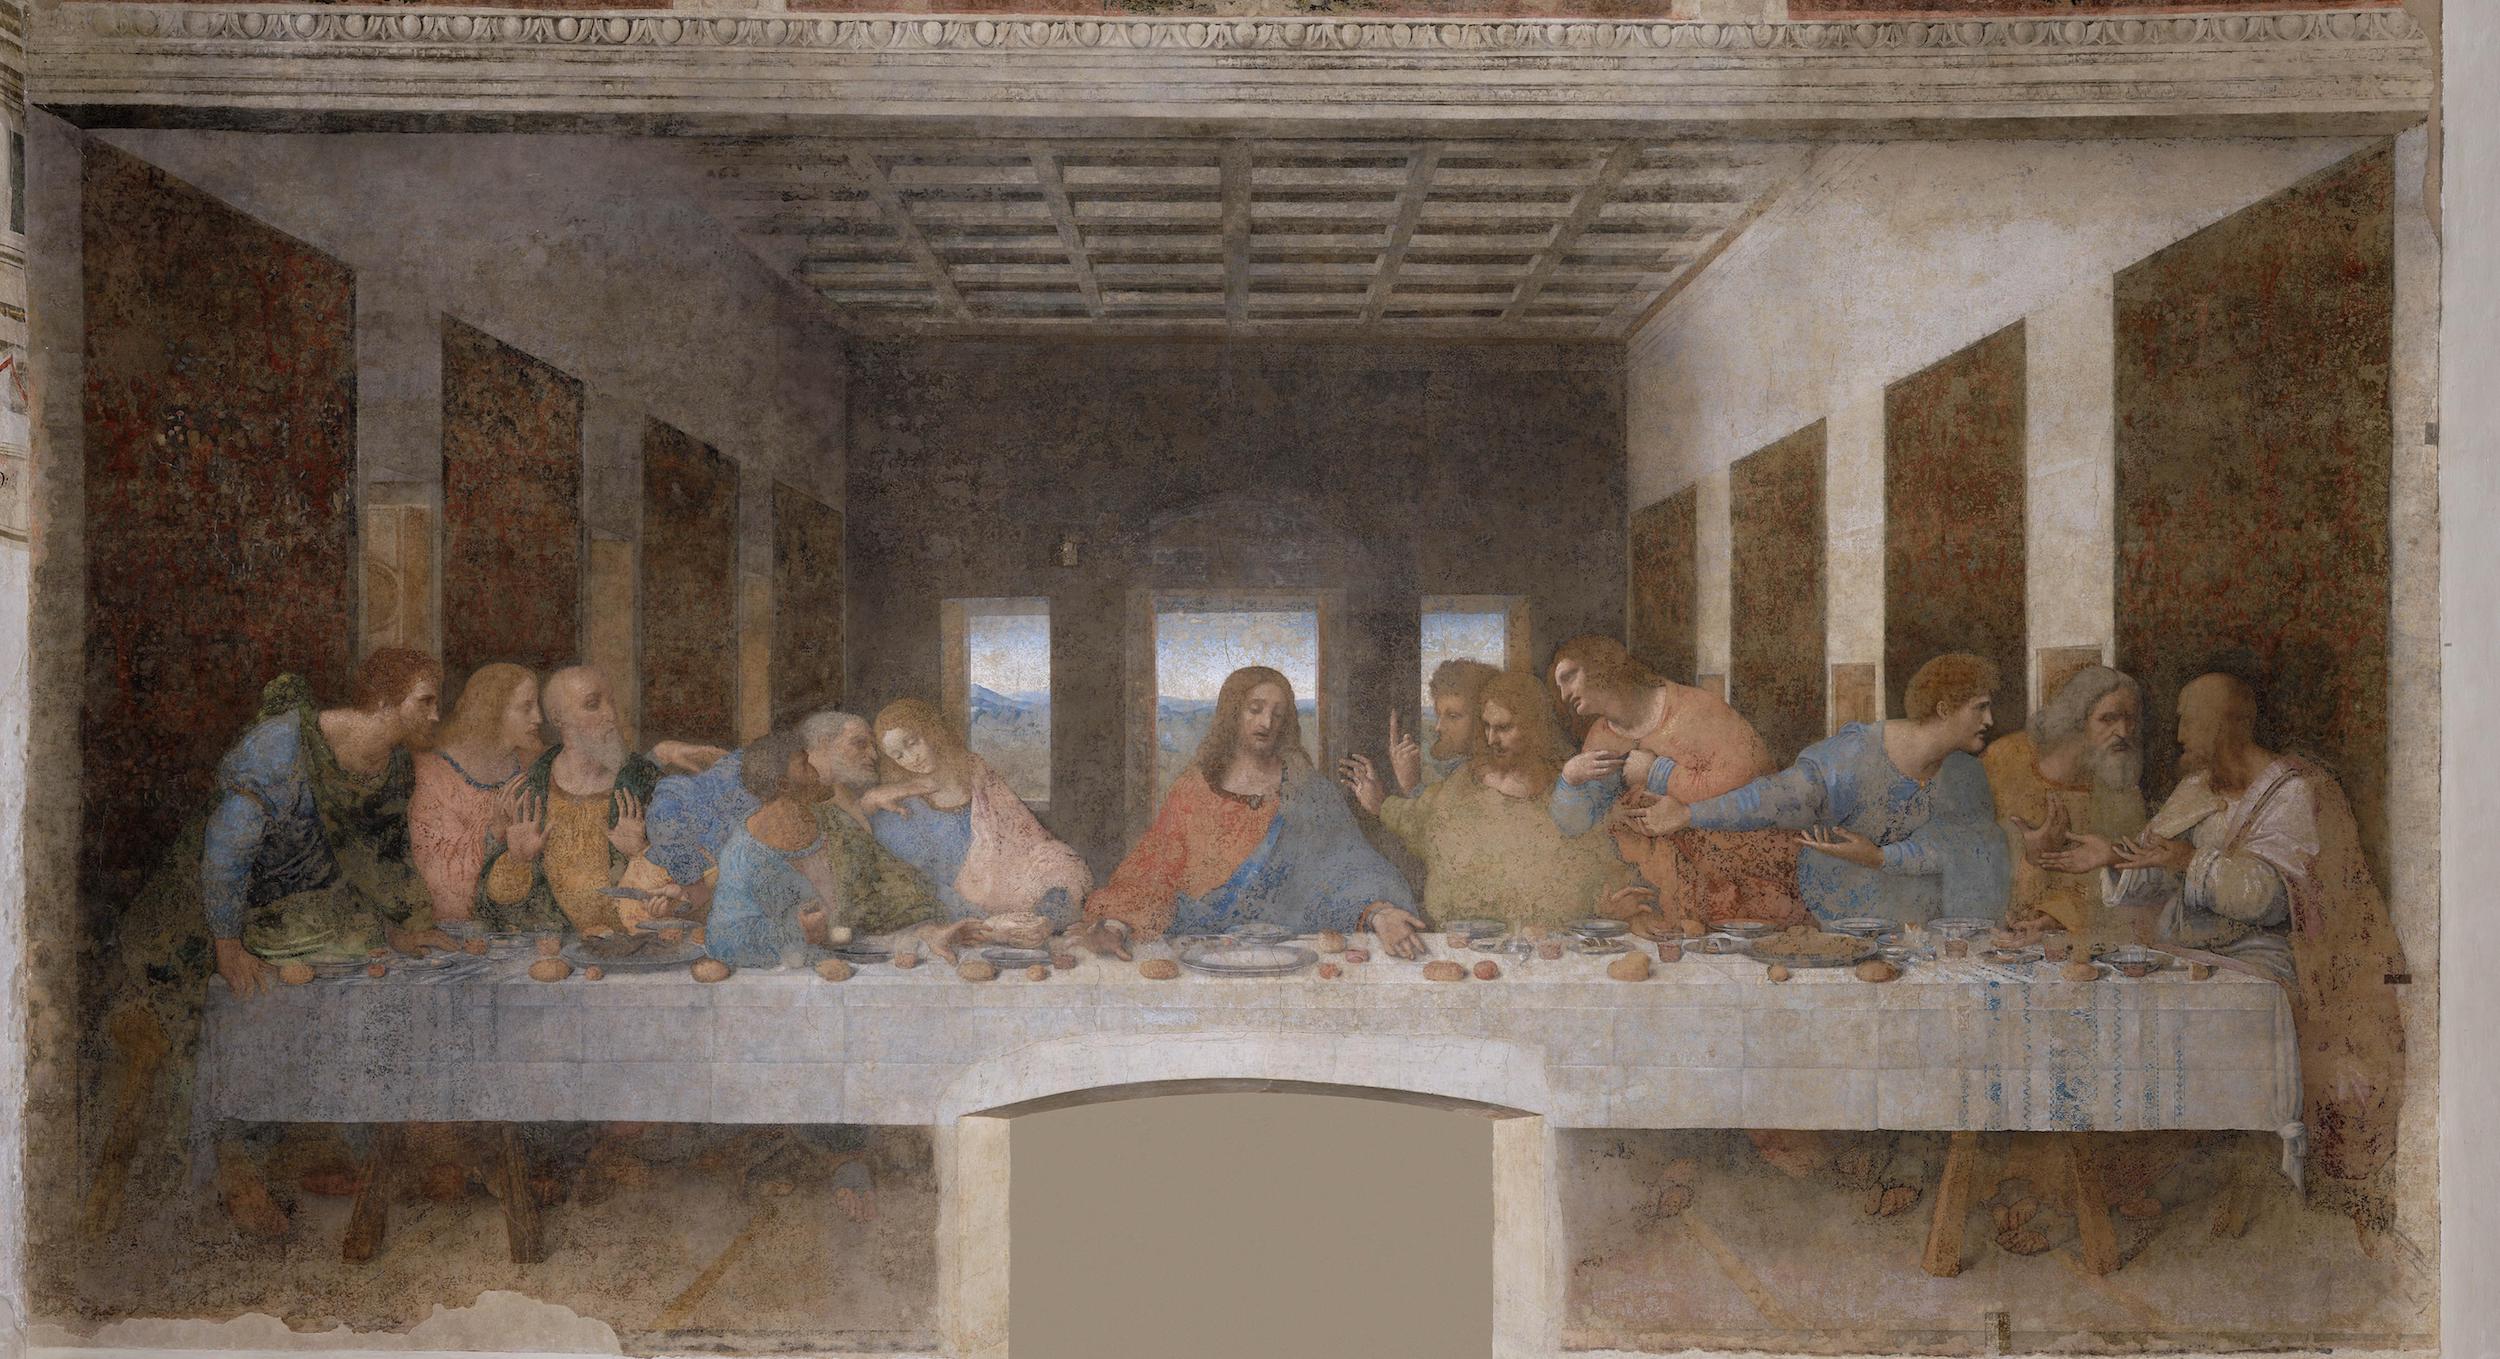 Het Laatste Avondmaal by Leonardo da Vinci - 1495-1498 - 460 x 880 cm 